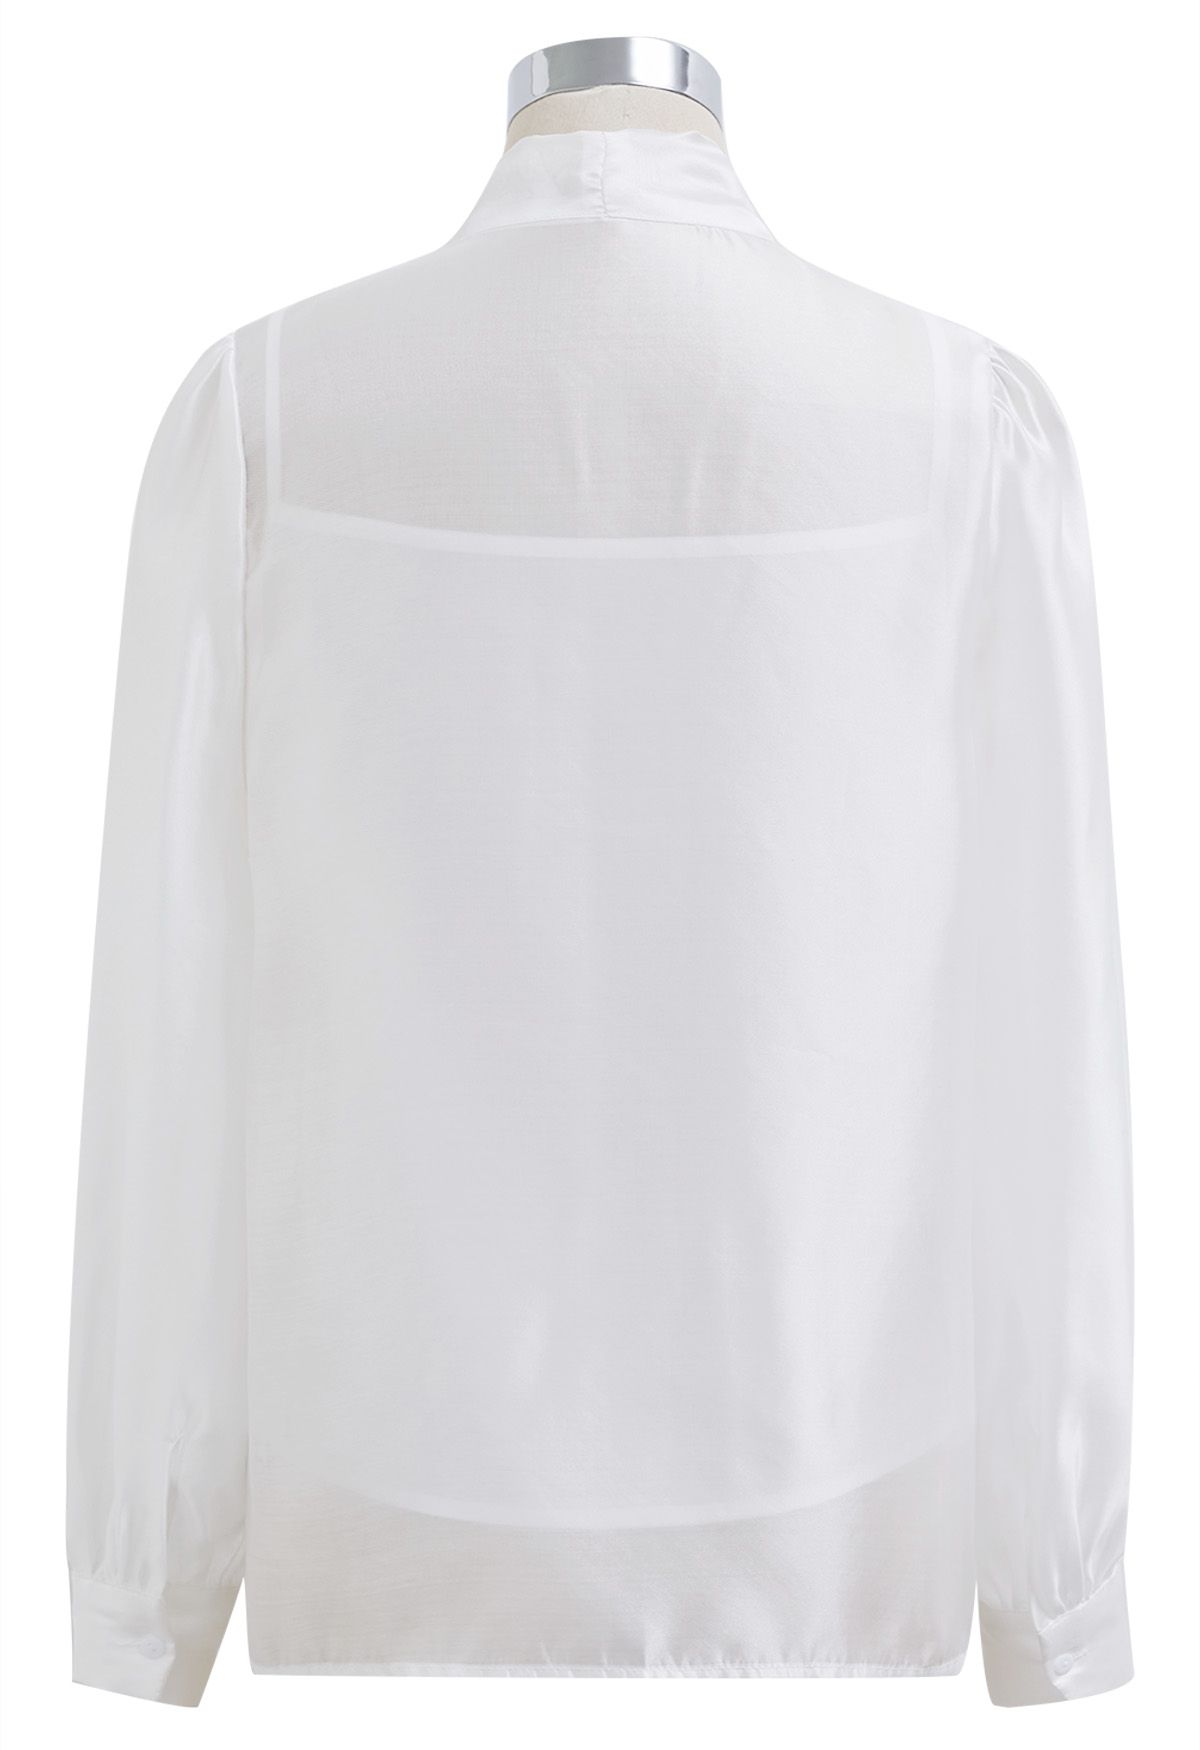 Elegant Bowknot Puff Sleeves Sheer Shirt in White